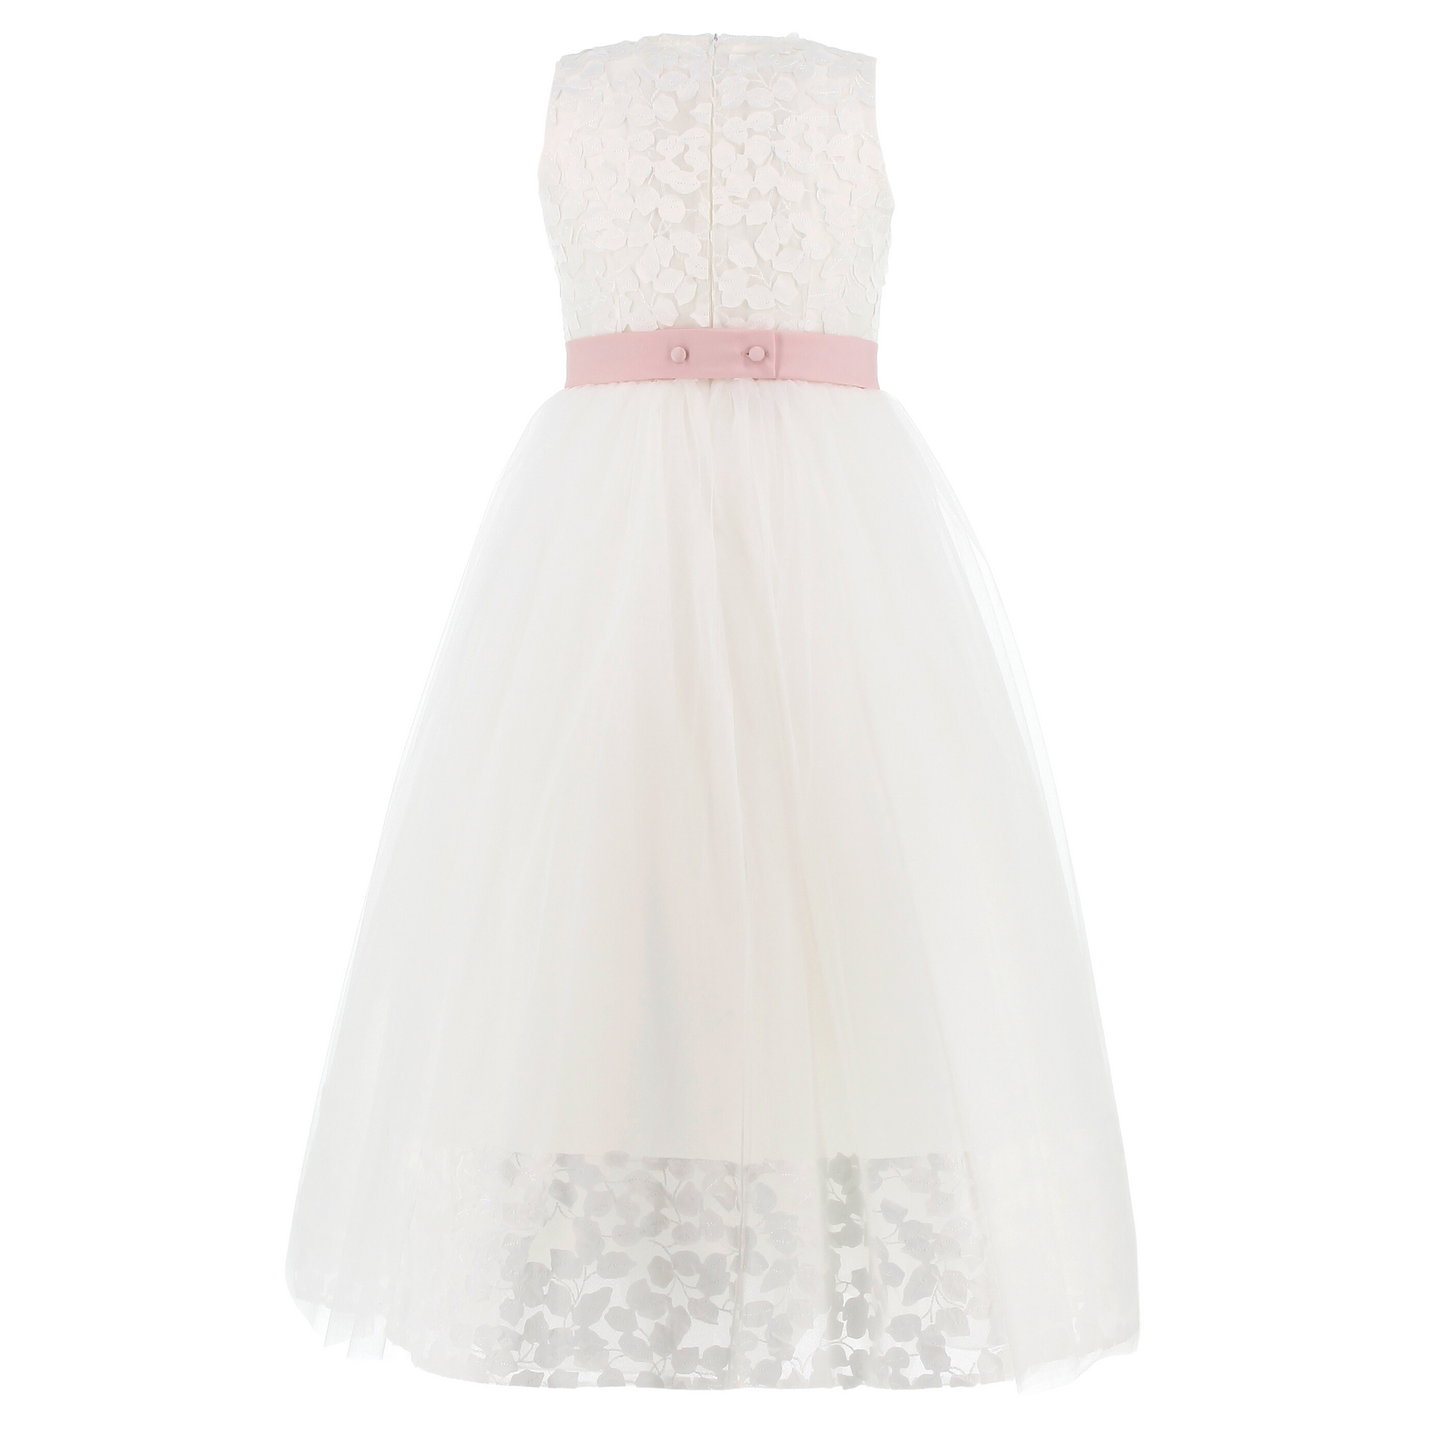 COLORICHIARI Milk White-Antique Pink Ceremony Dress